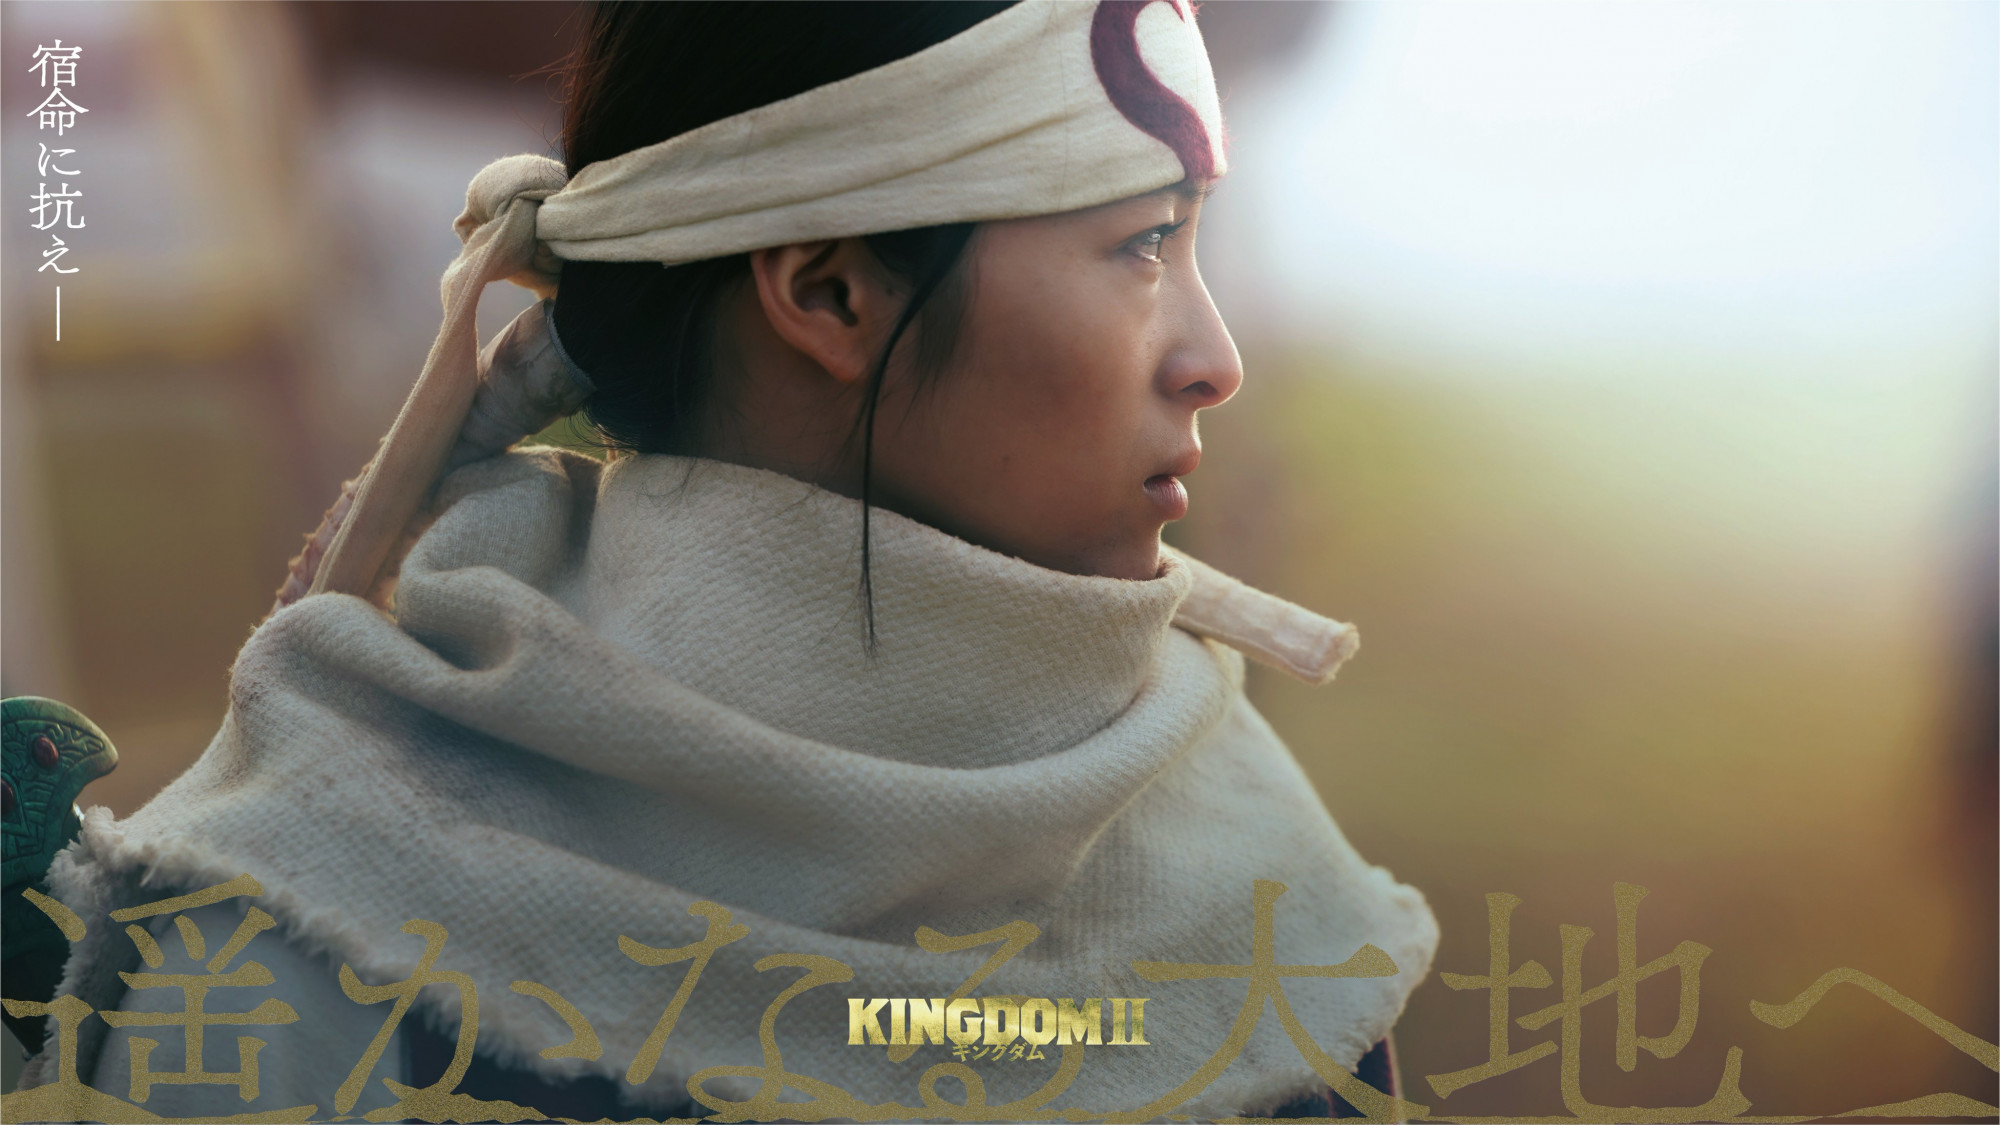 Nana Seino Raises Hype with Her Upcoming Portrayal of Kyou Kai in “Kingdom 2” Live Action Adaptation￼